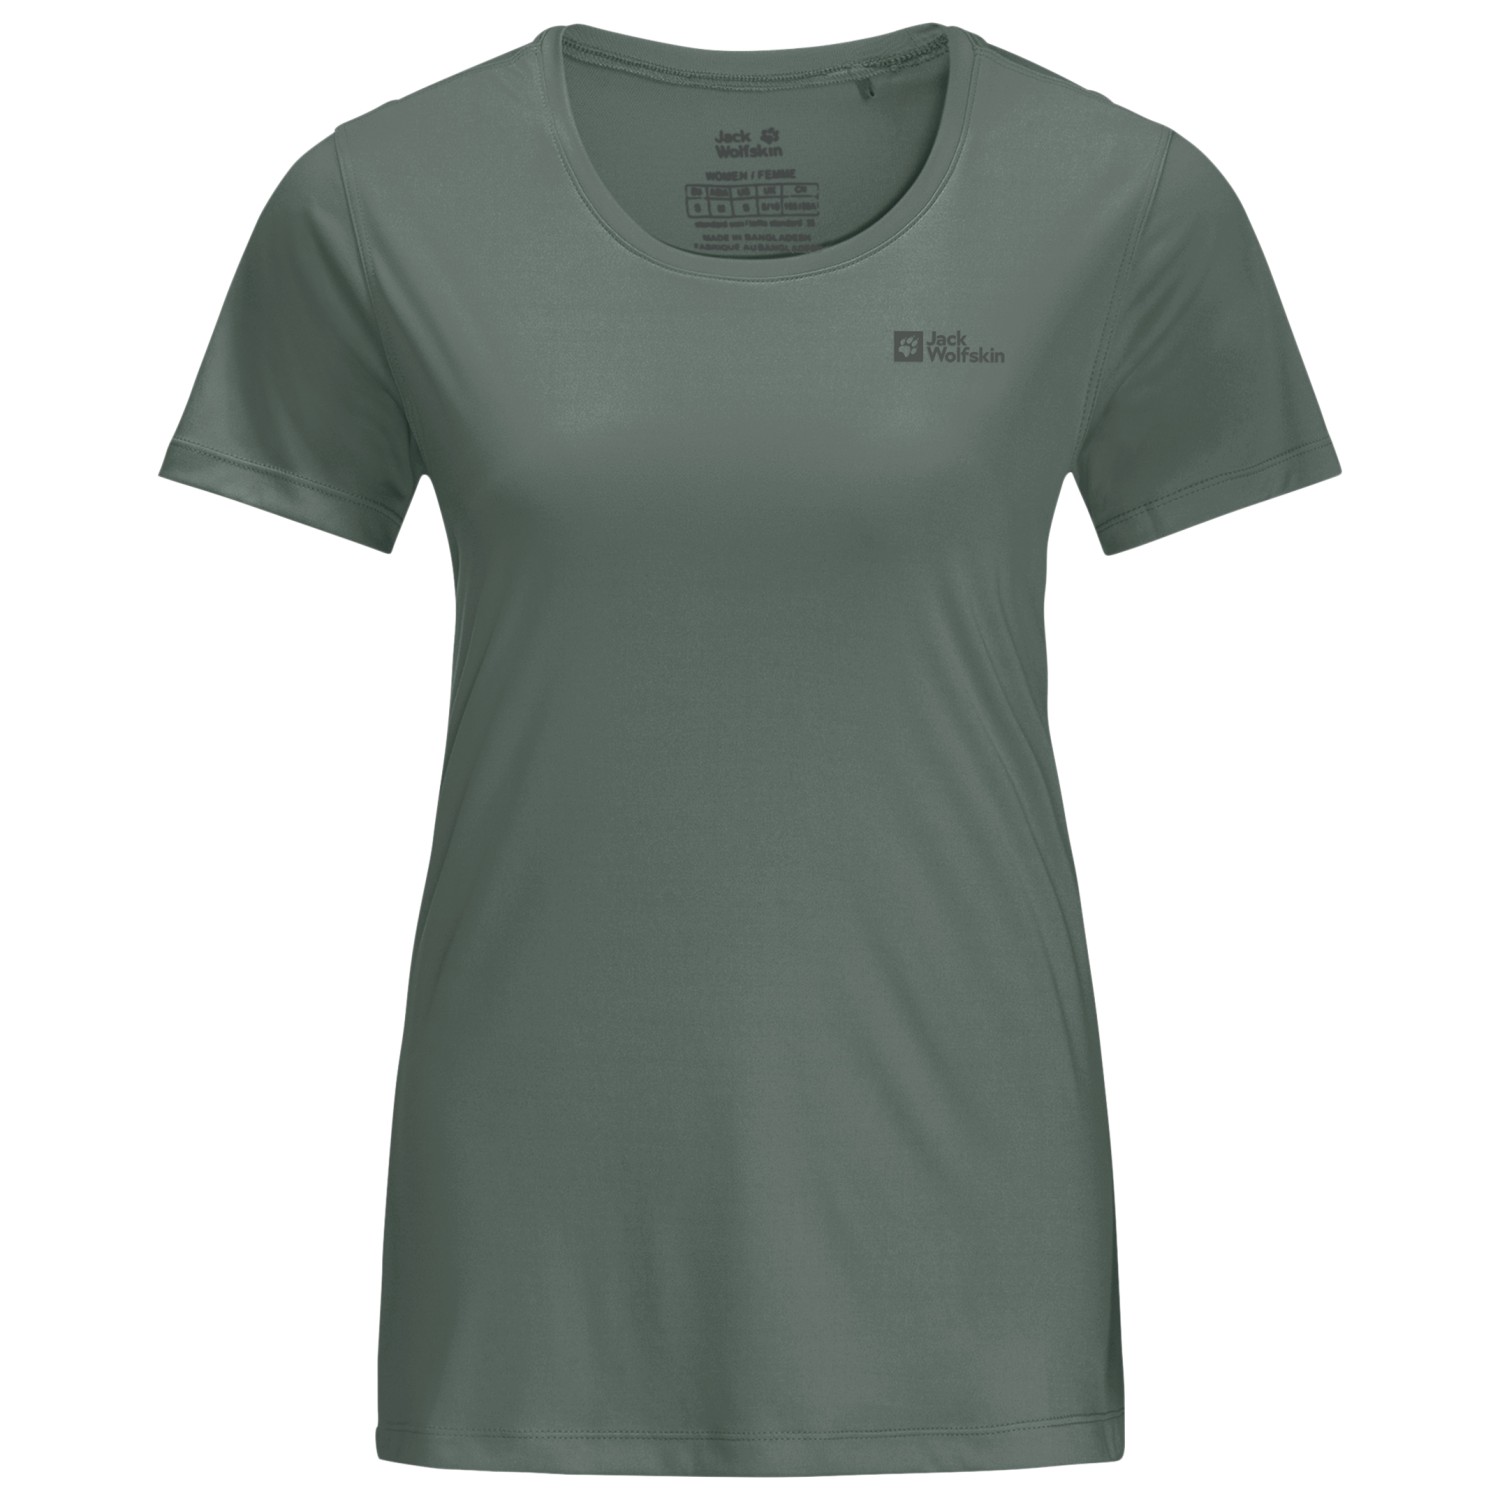 Функциональная рубашка Jack Wolfskin Women's Tech Tee, цвет Hedge Green